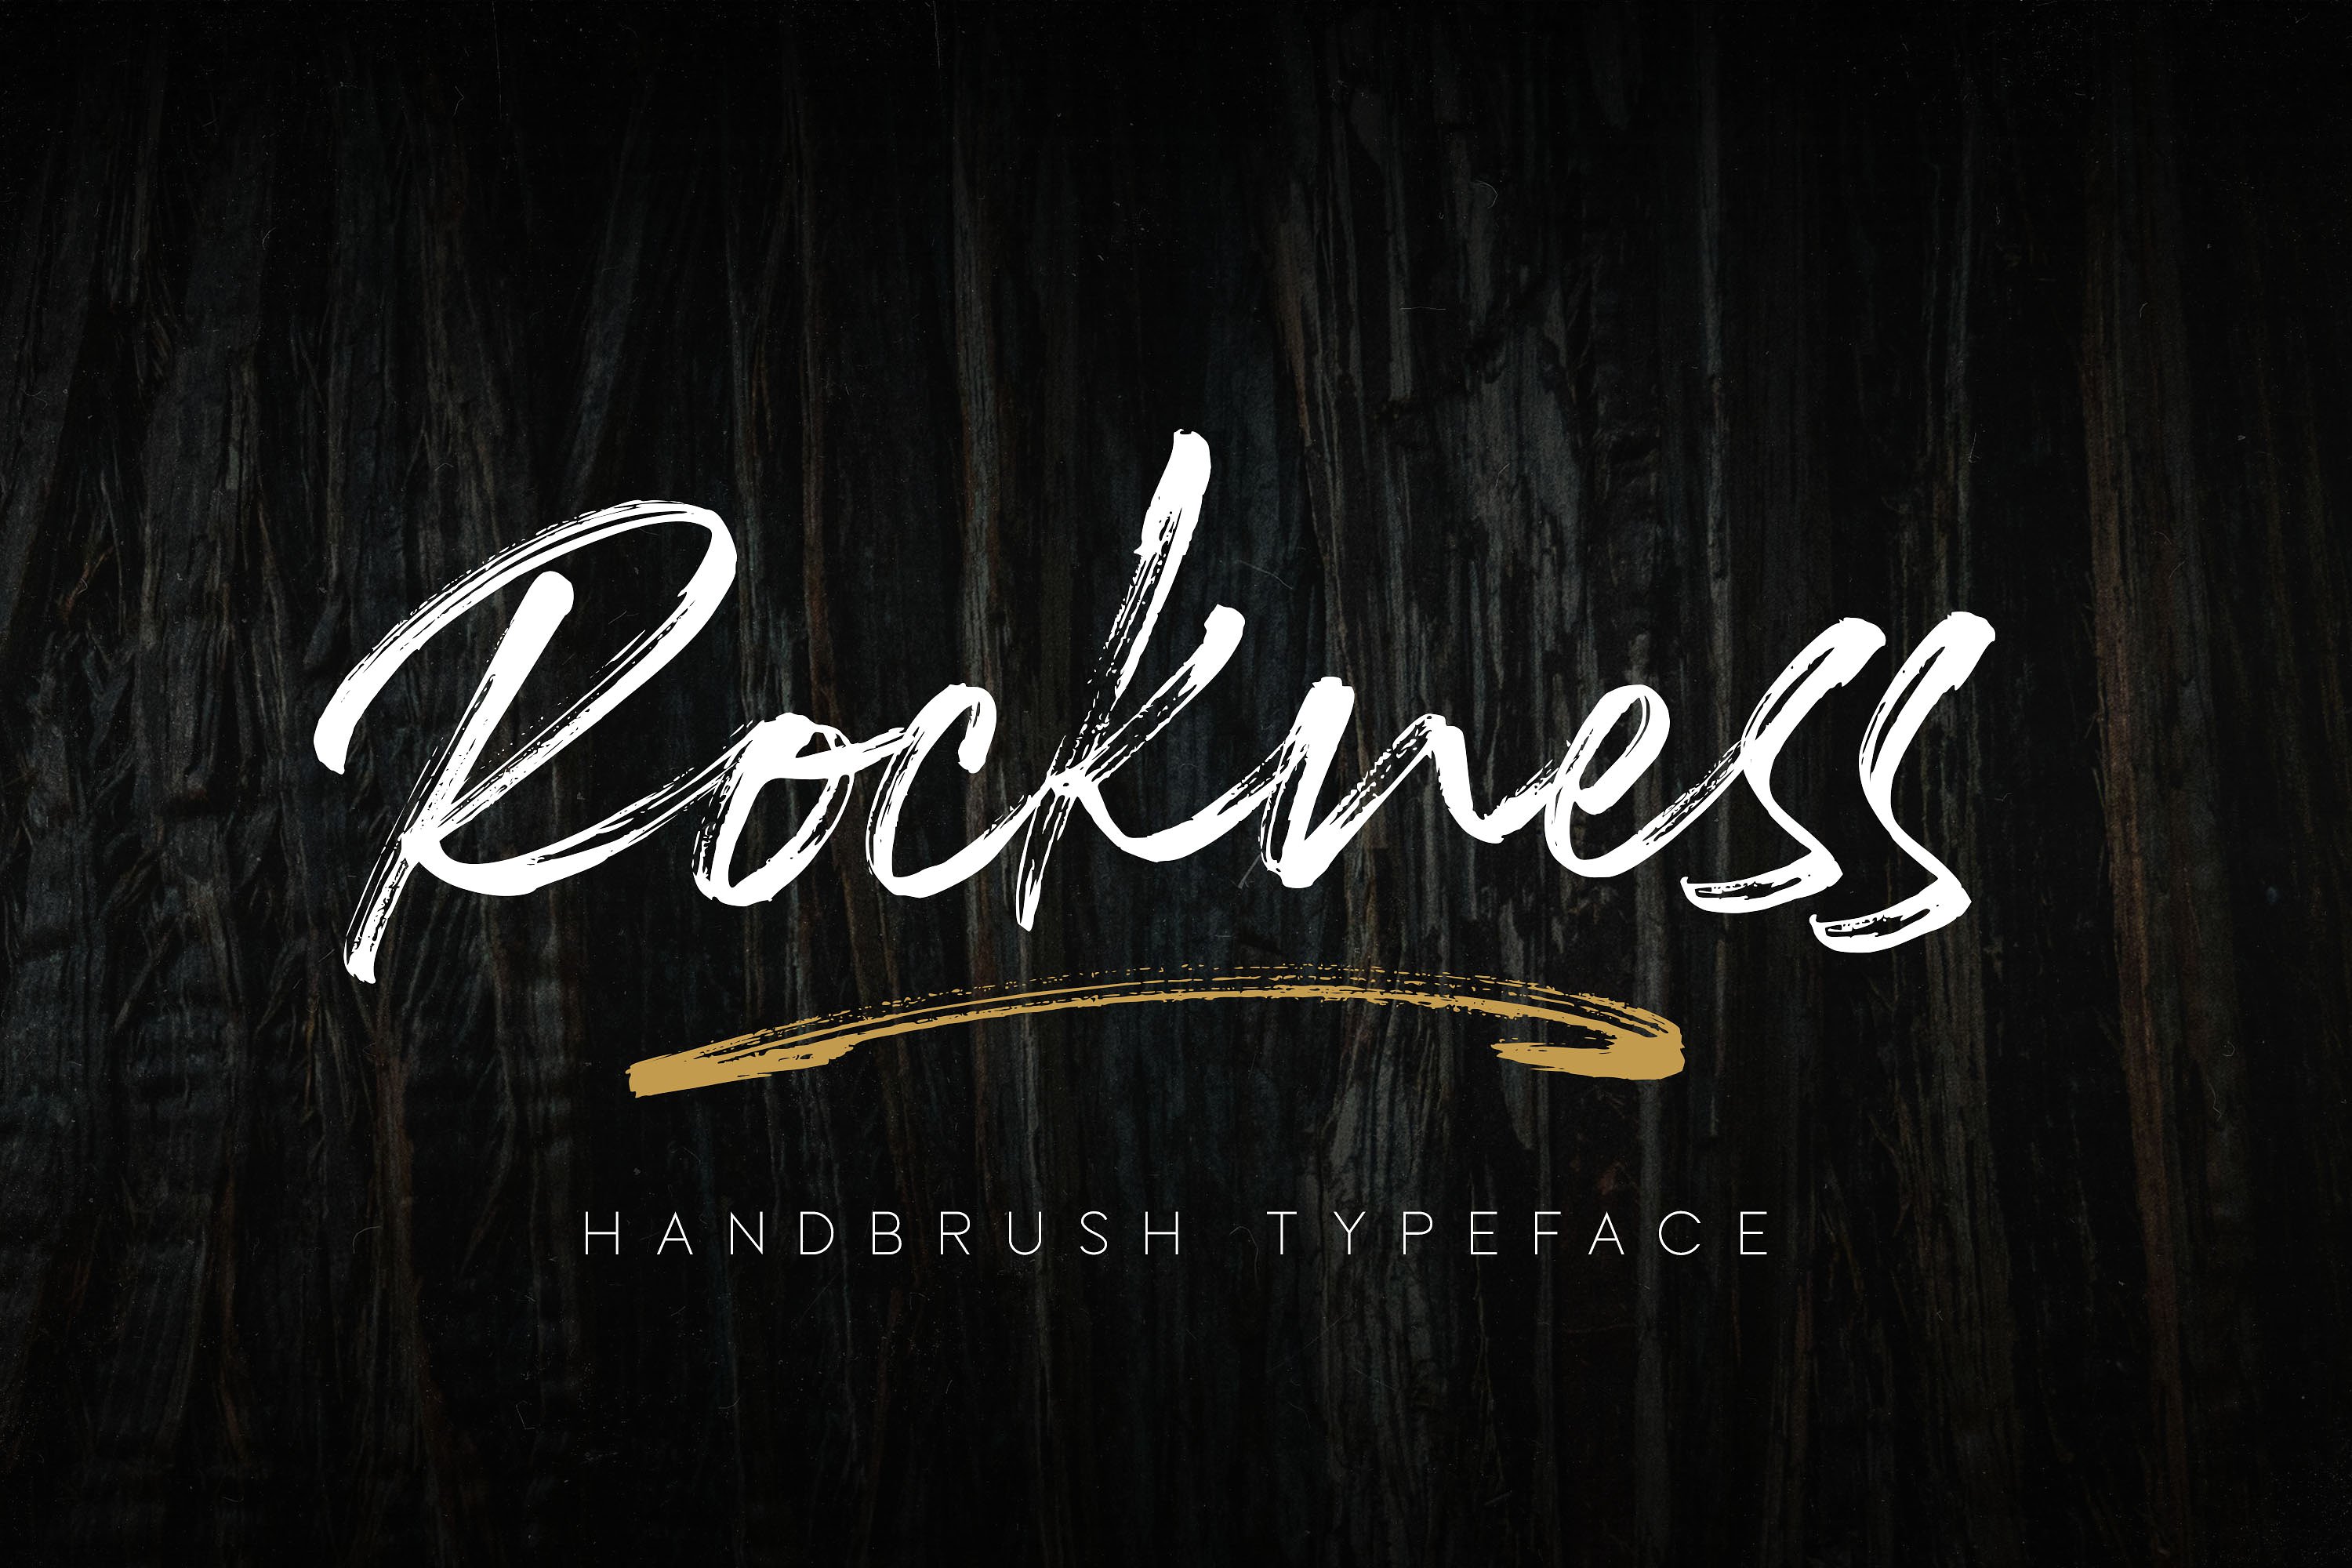 Rockness大气手写书法毛笔笔刷英文字体免费下载插图